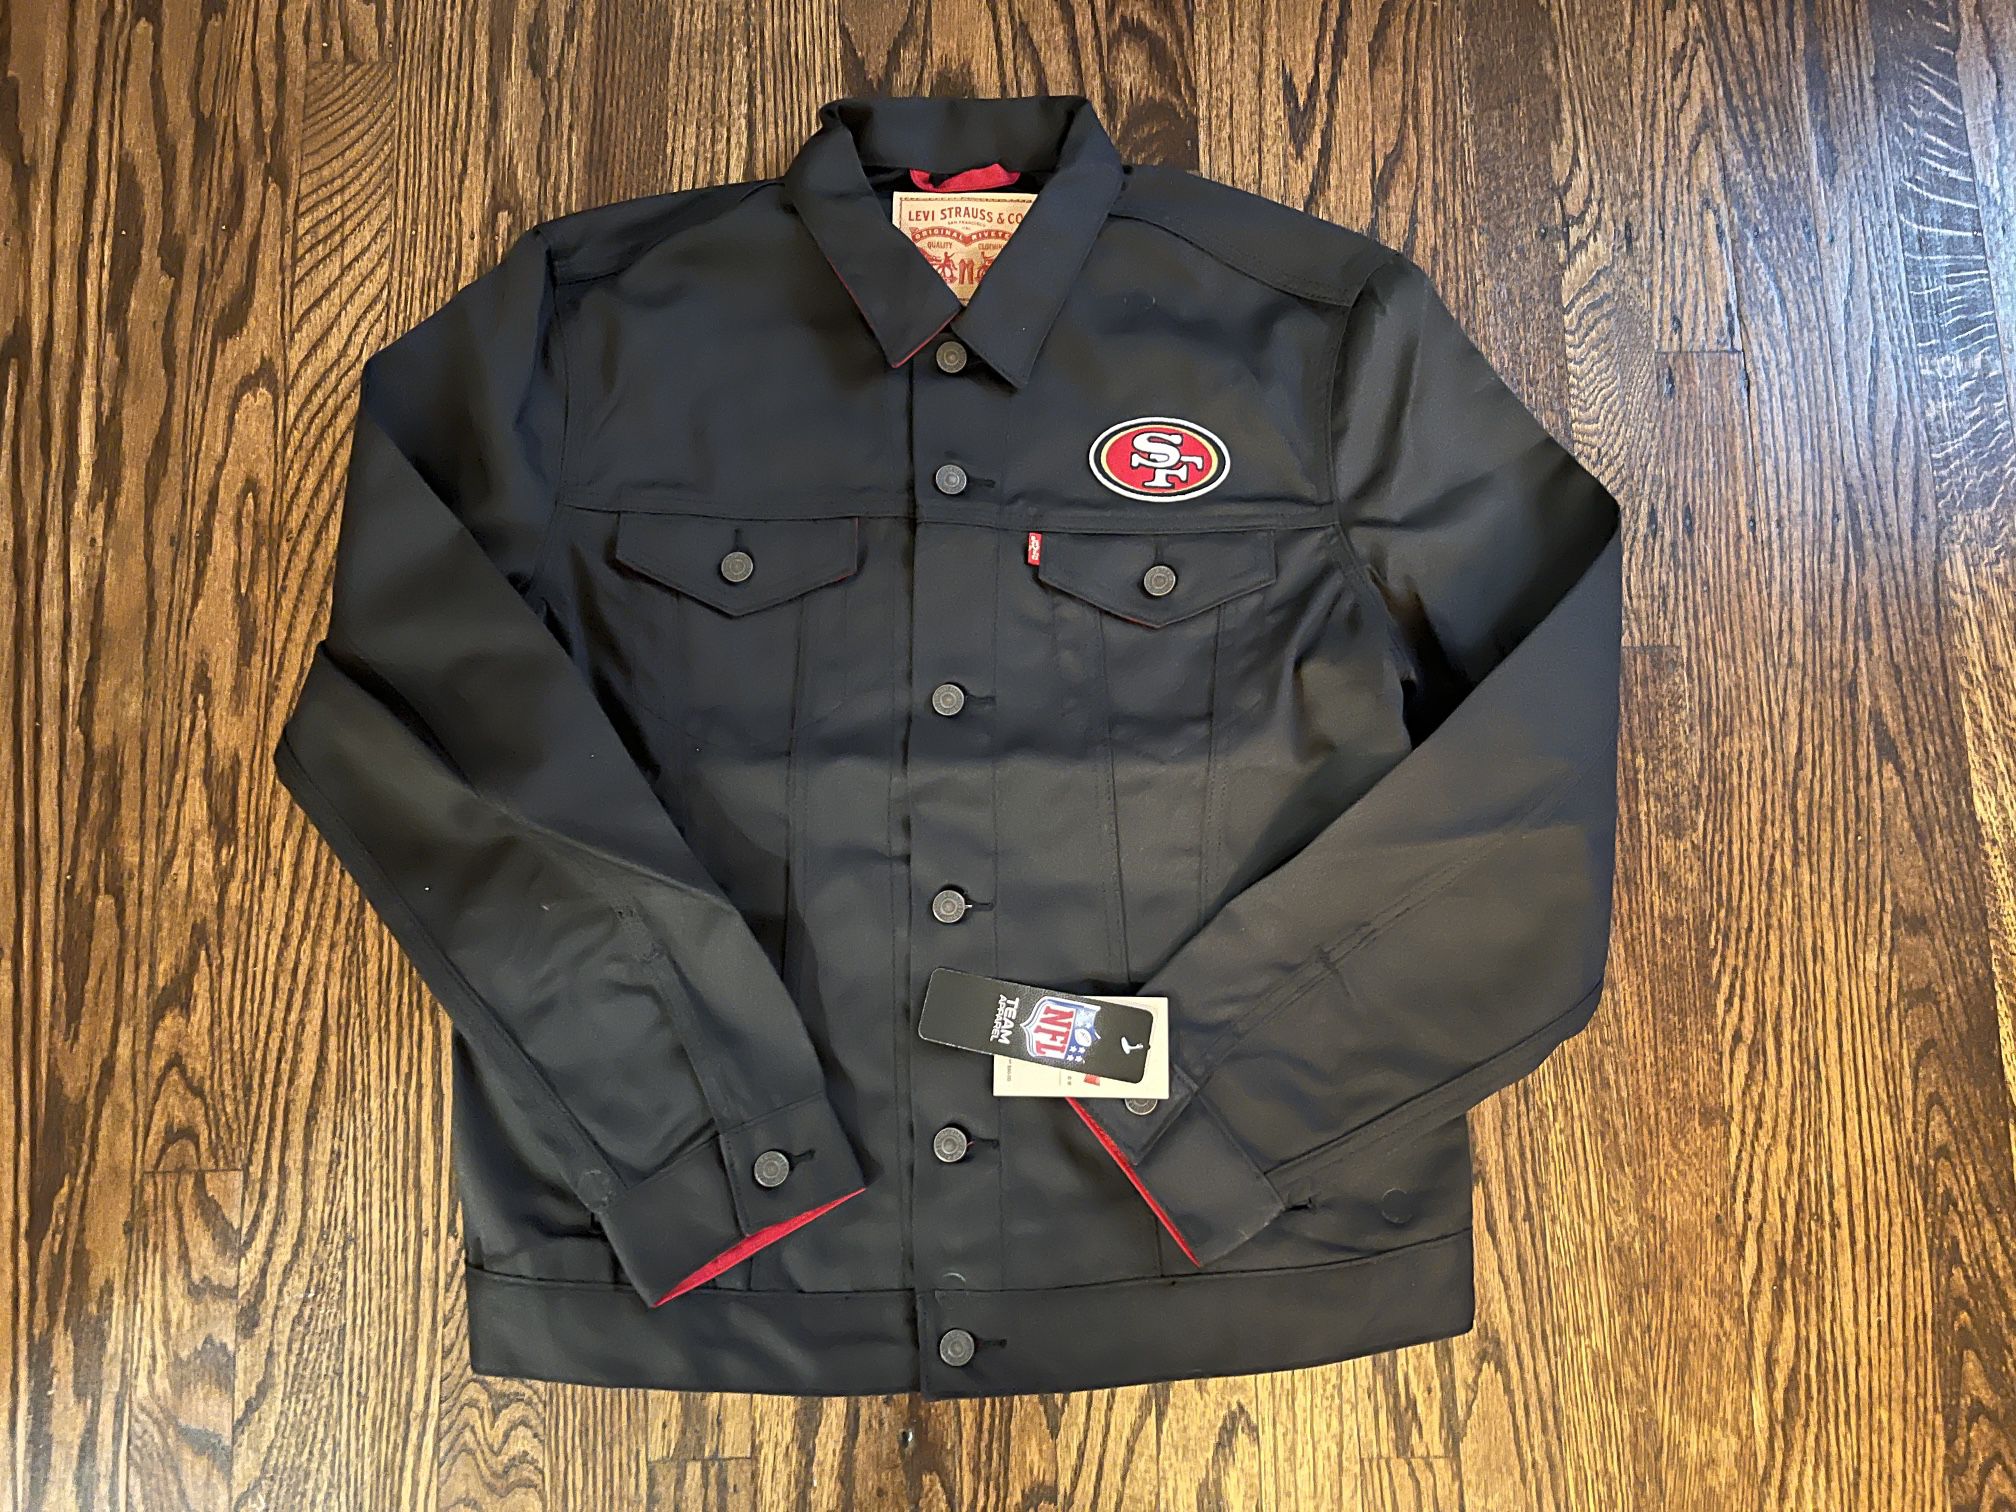 Brand New Levi’s 49er Denim Jacket